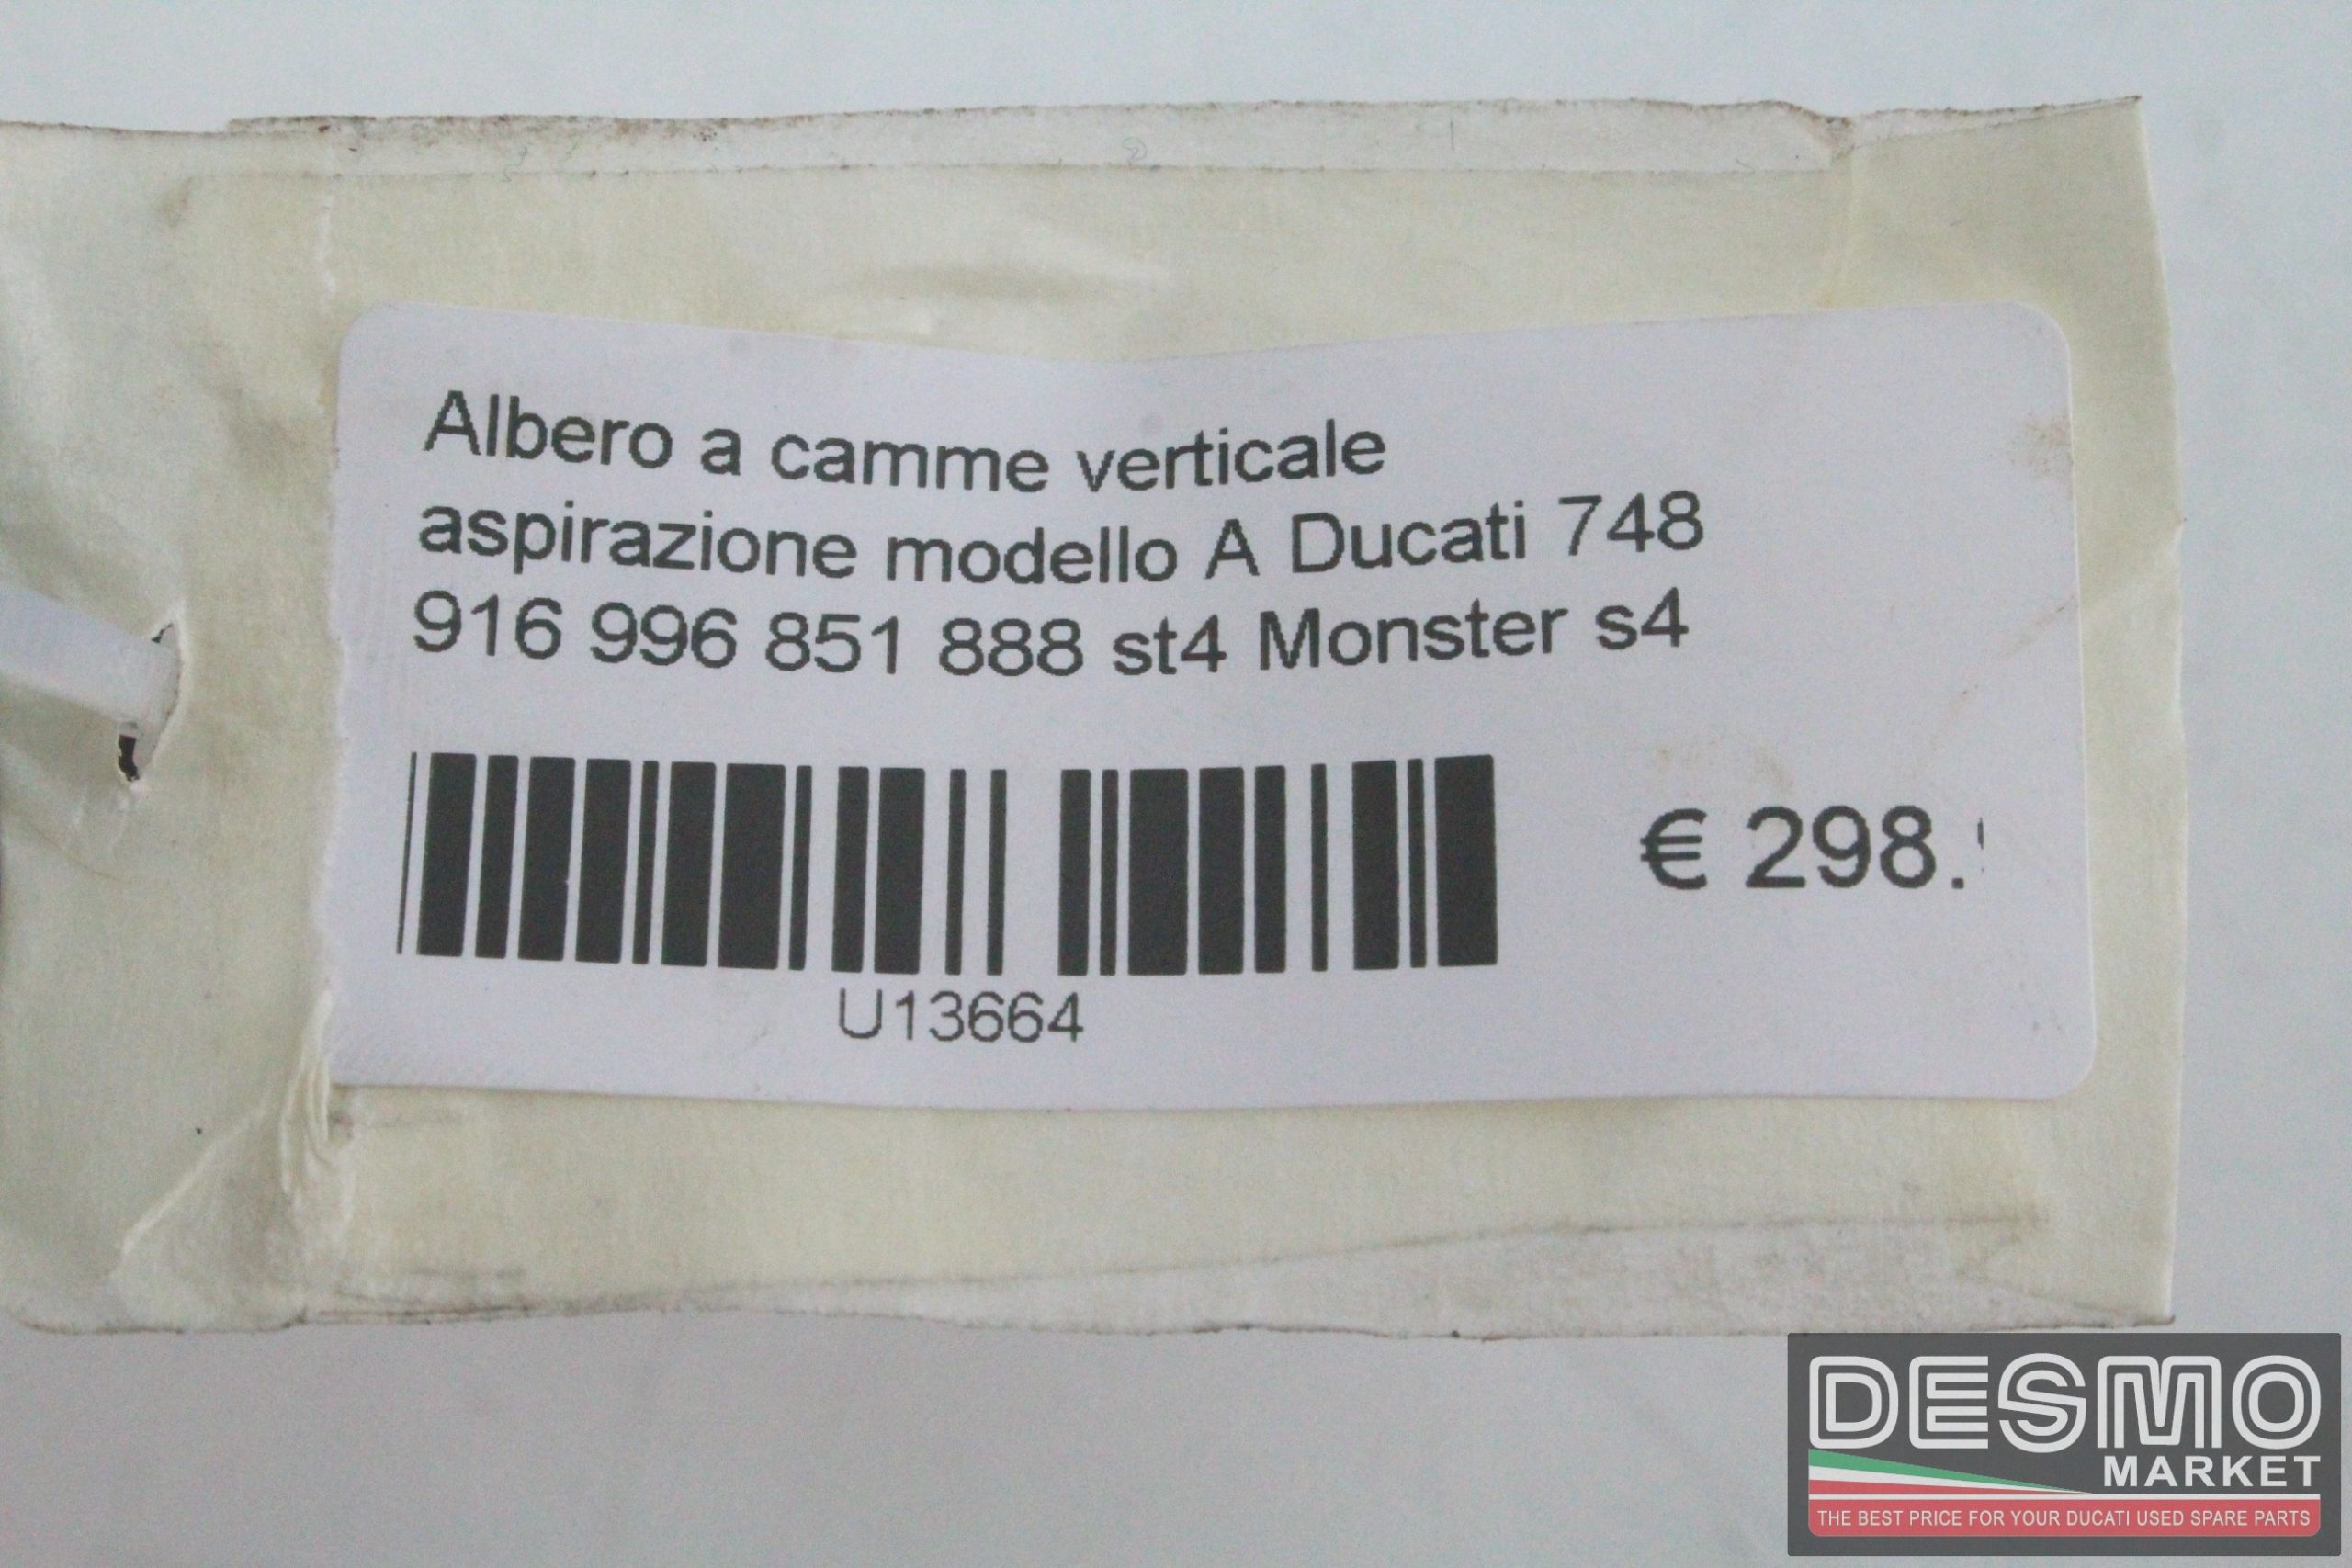 Vertical intake camshaft model A Ducati 748 916 996 851 888 - Desmo Market